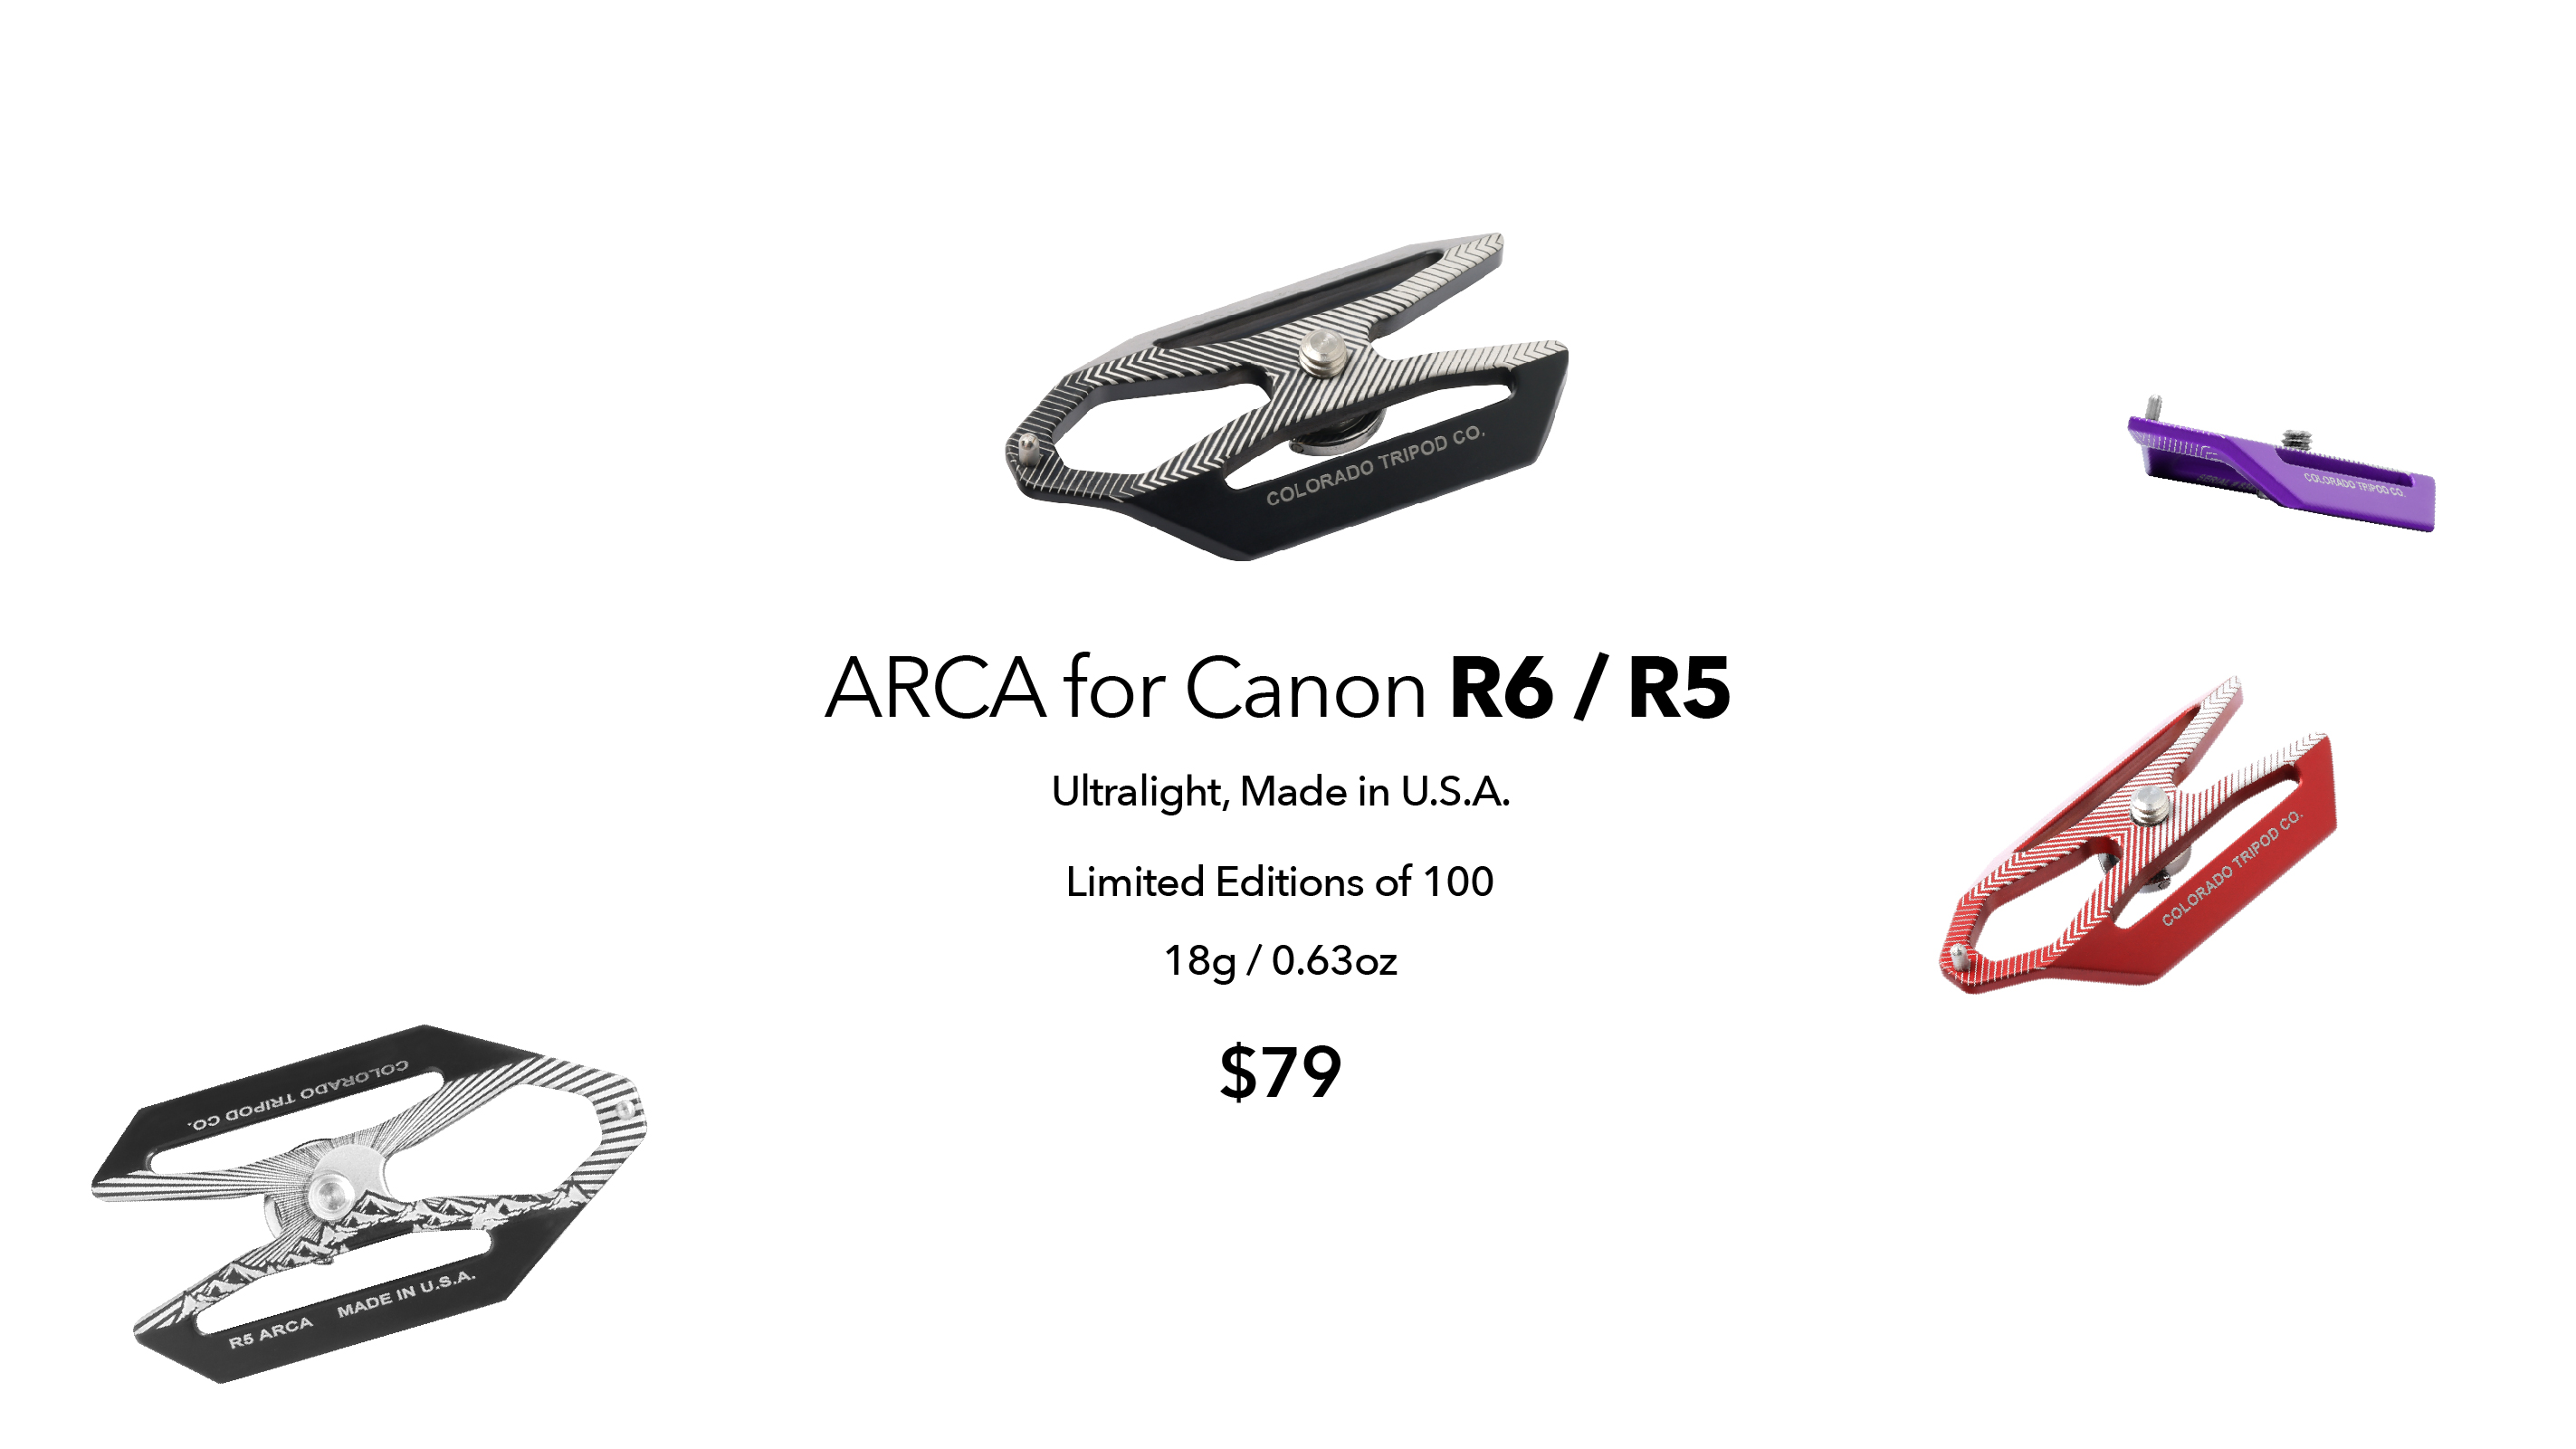 Ultralight Arca for Nikon Z6 Universal Arca Plate for Tripod Ball Head in Black 